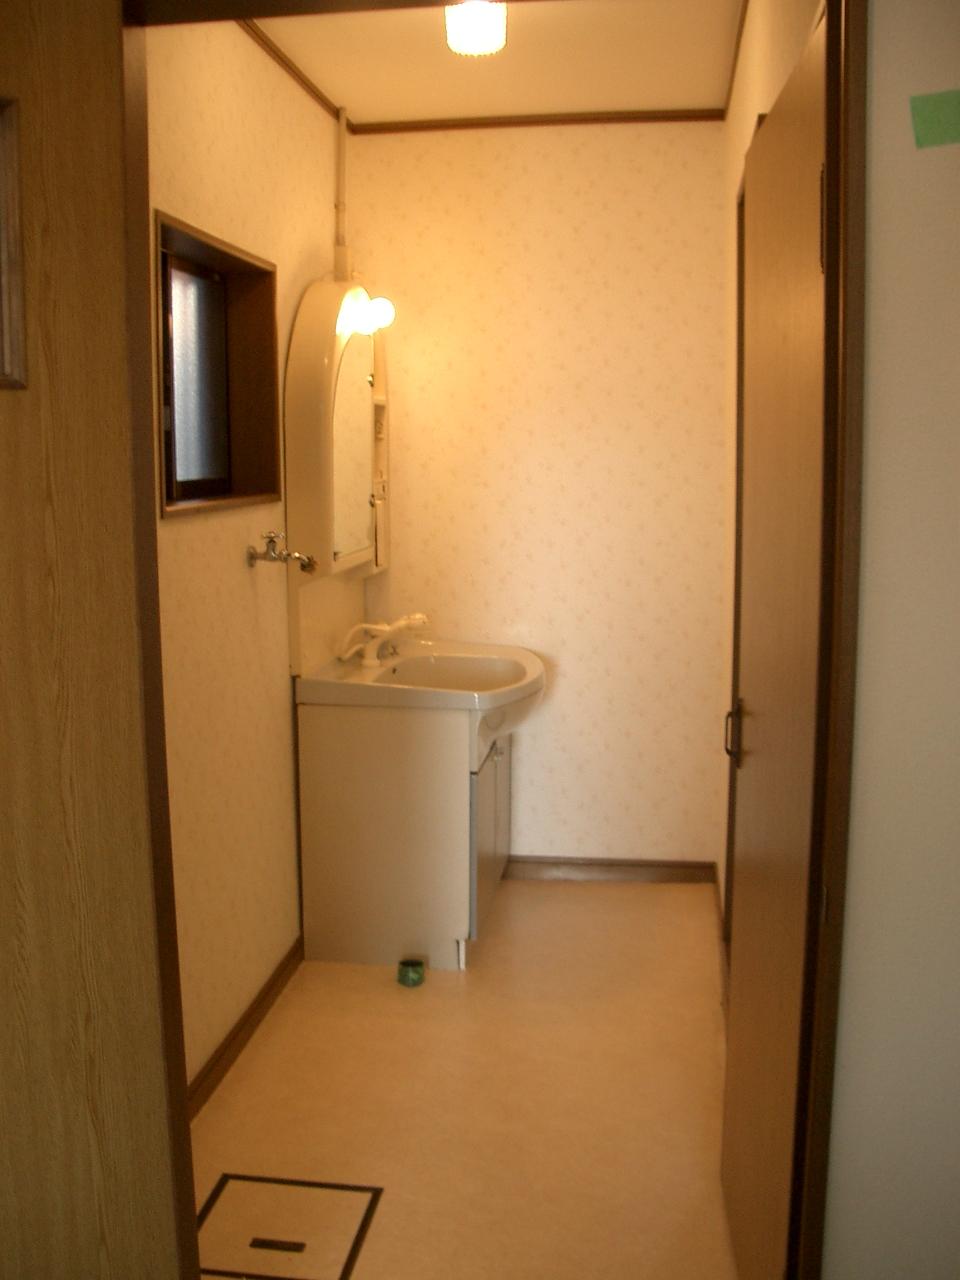 Bathroom. This basin ^^